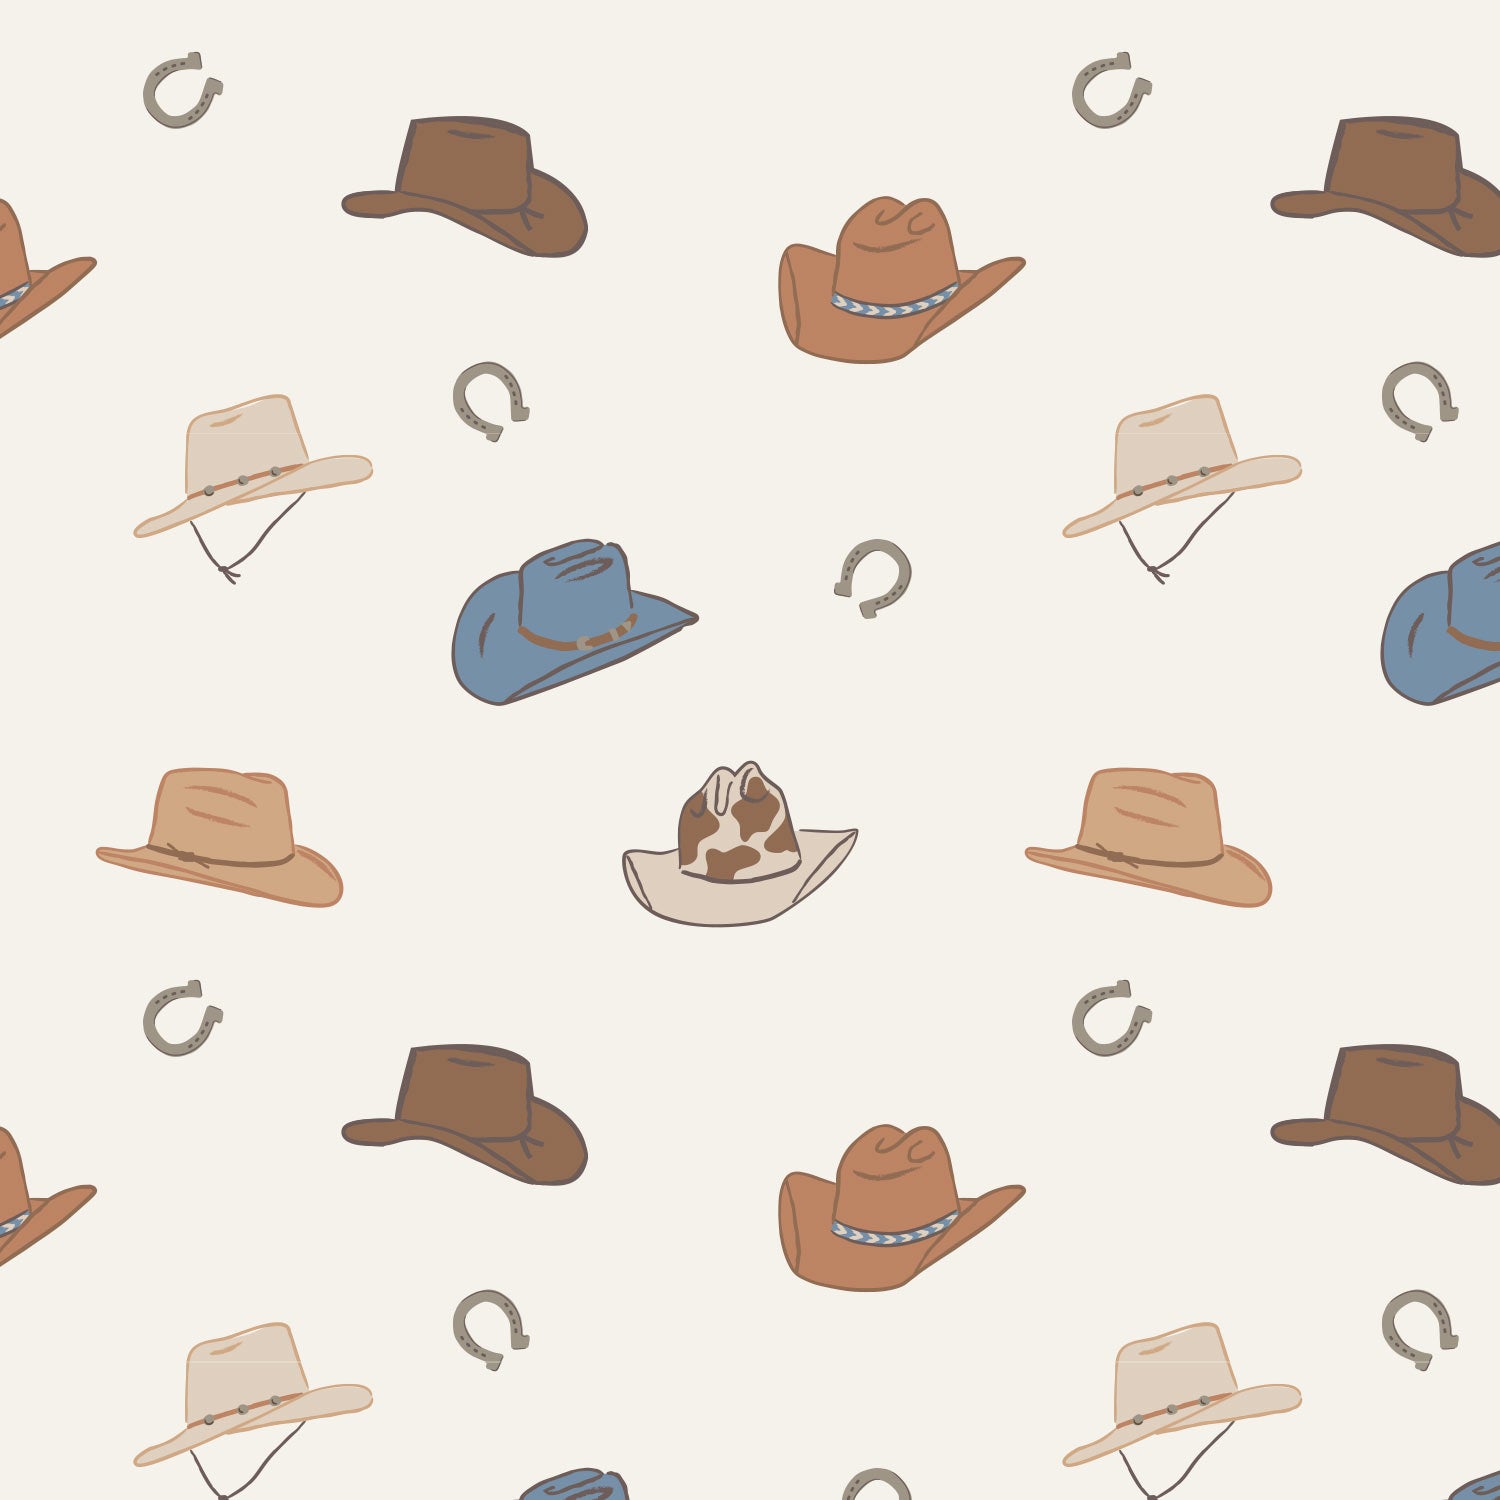 Corduroy Cowboy Hat, Cowboy/Outback Hat